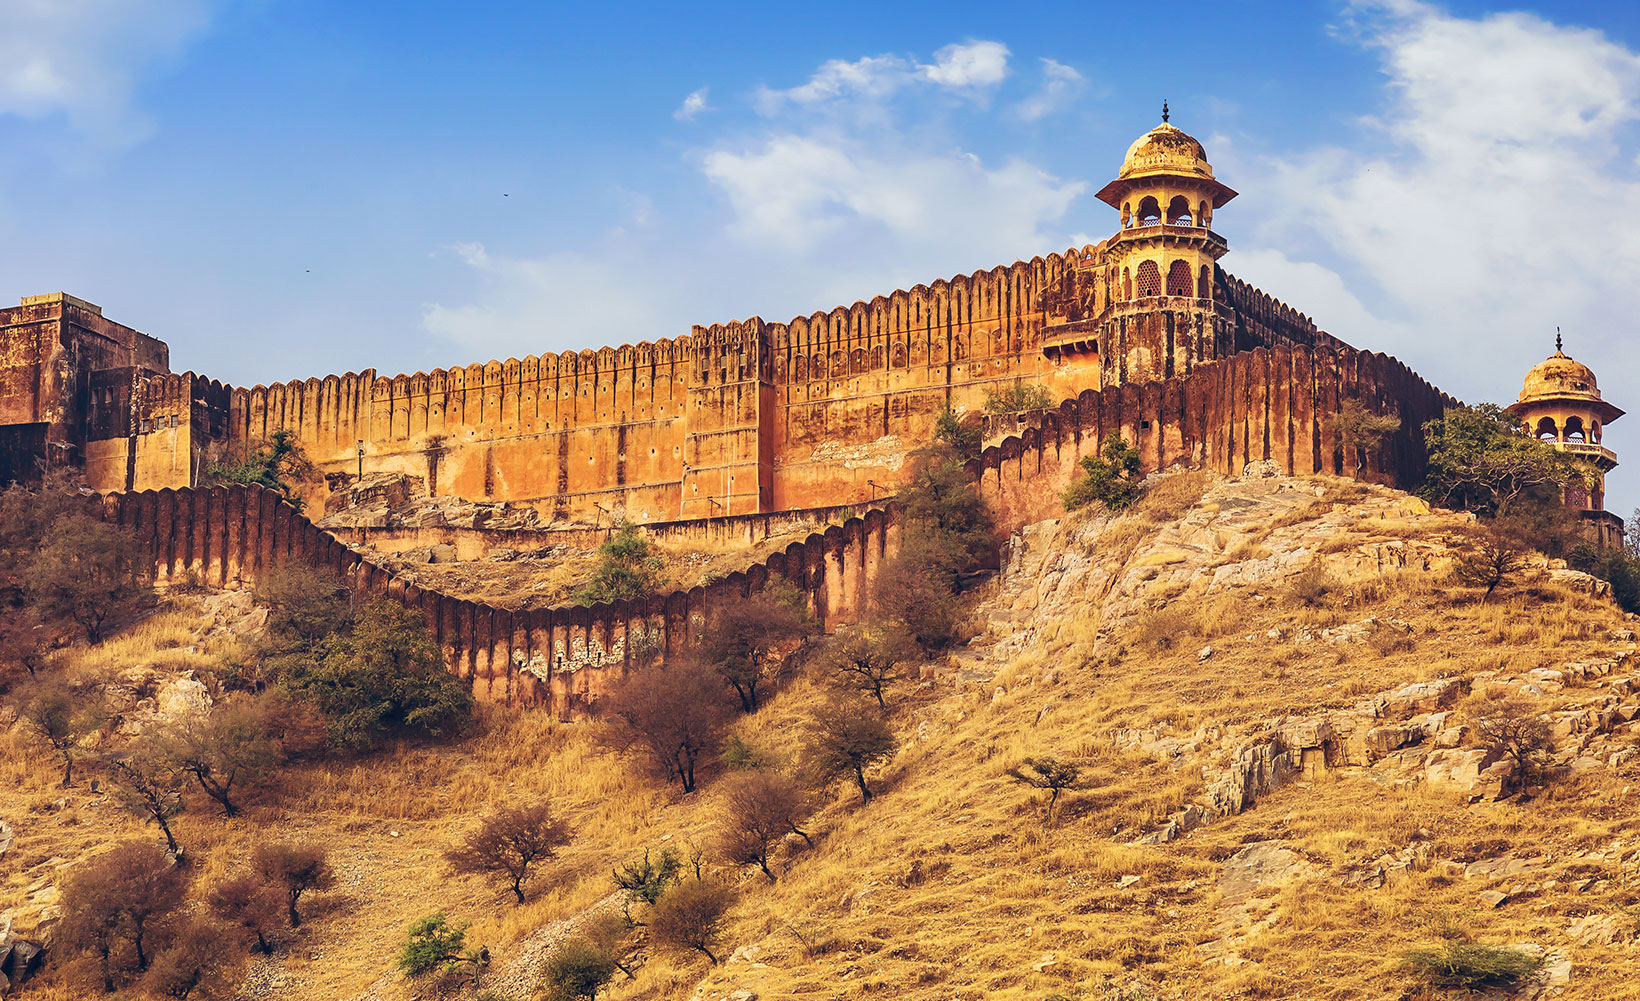 Jaipur certificata come patrimonio mondiale dall’UNESCO